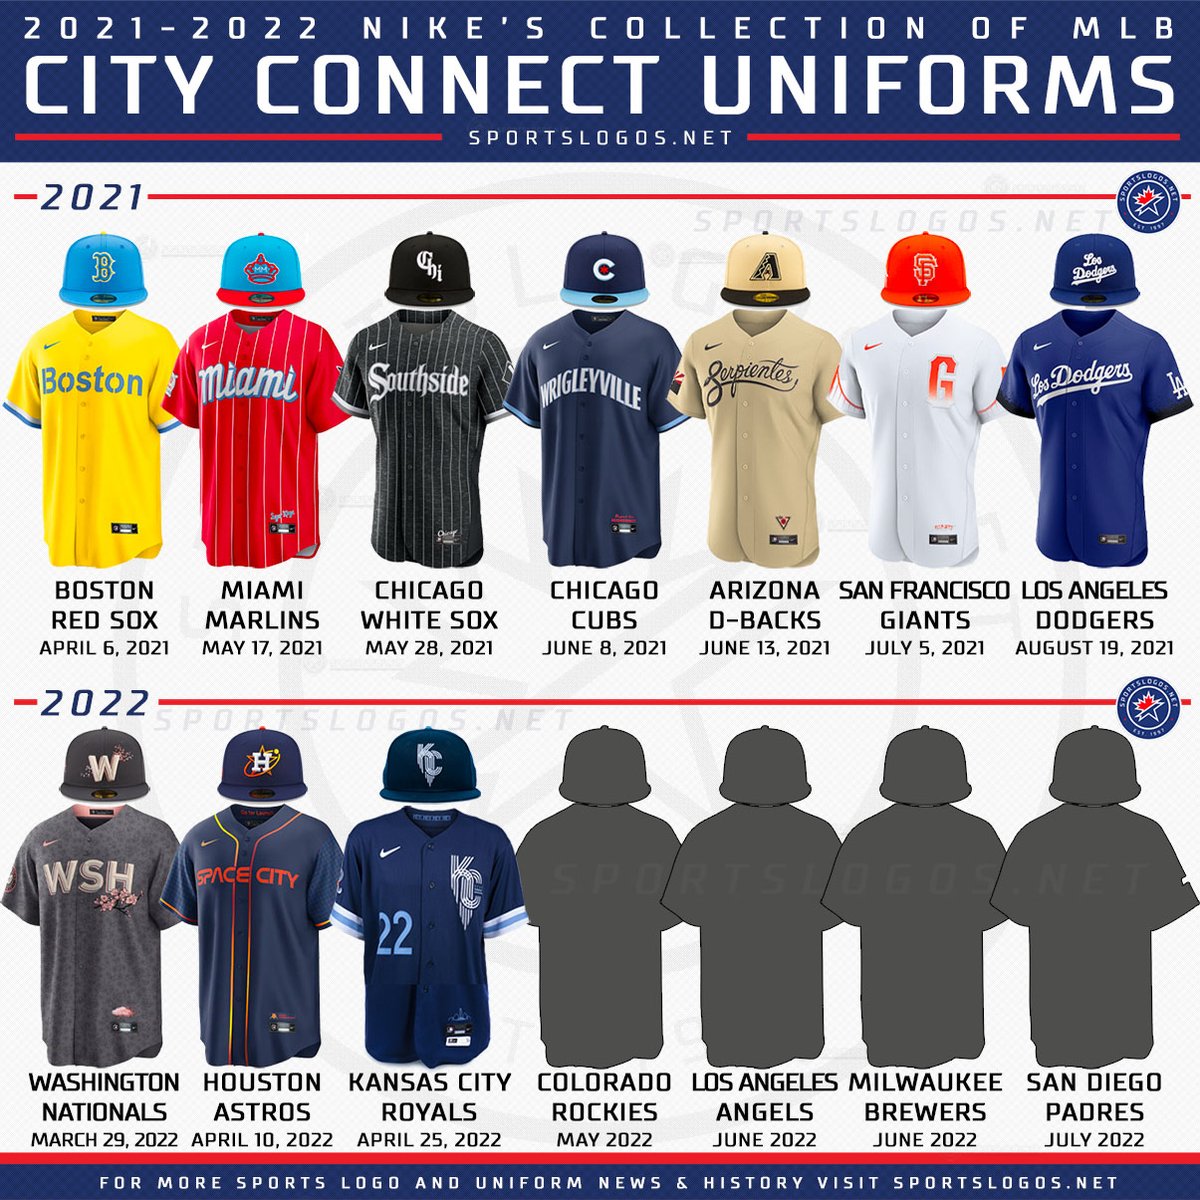 Kansas City Royals Concept Uniforms - Concepts - Chris Creamer's